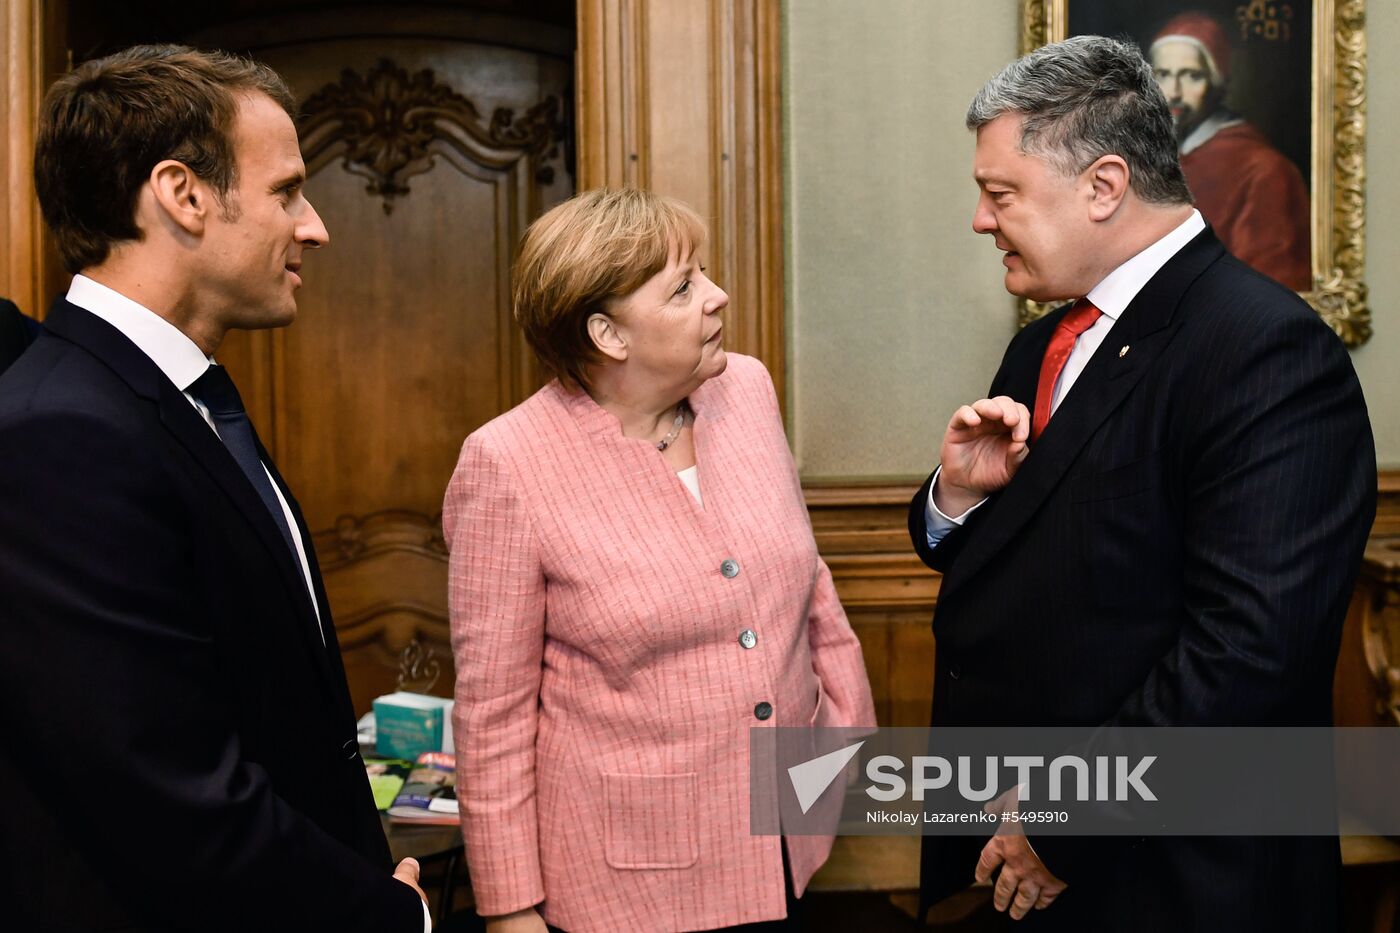 Meeting of German Chancellor Angela Merkel, French President Emmanuel Macron and Ukrainian President Petro Poroshenko